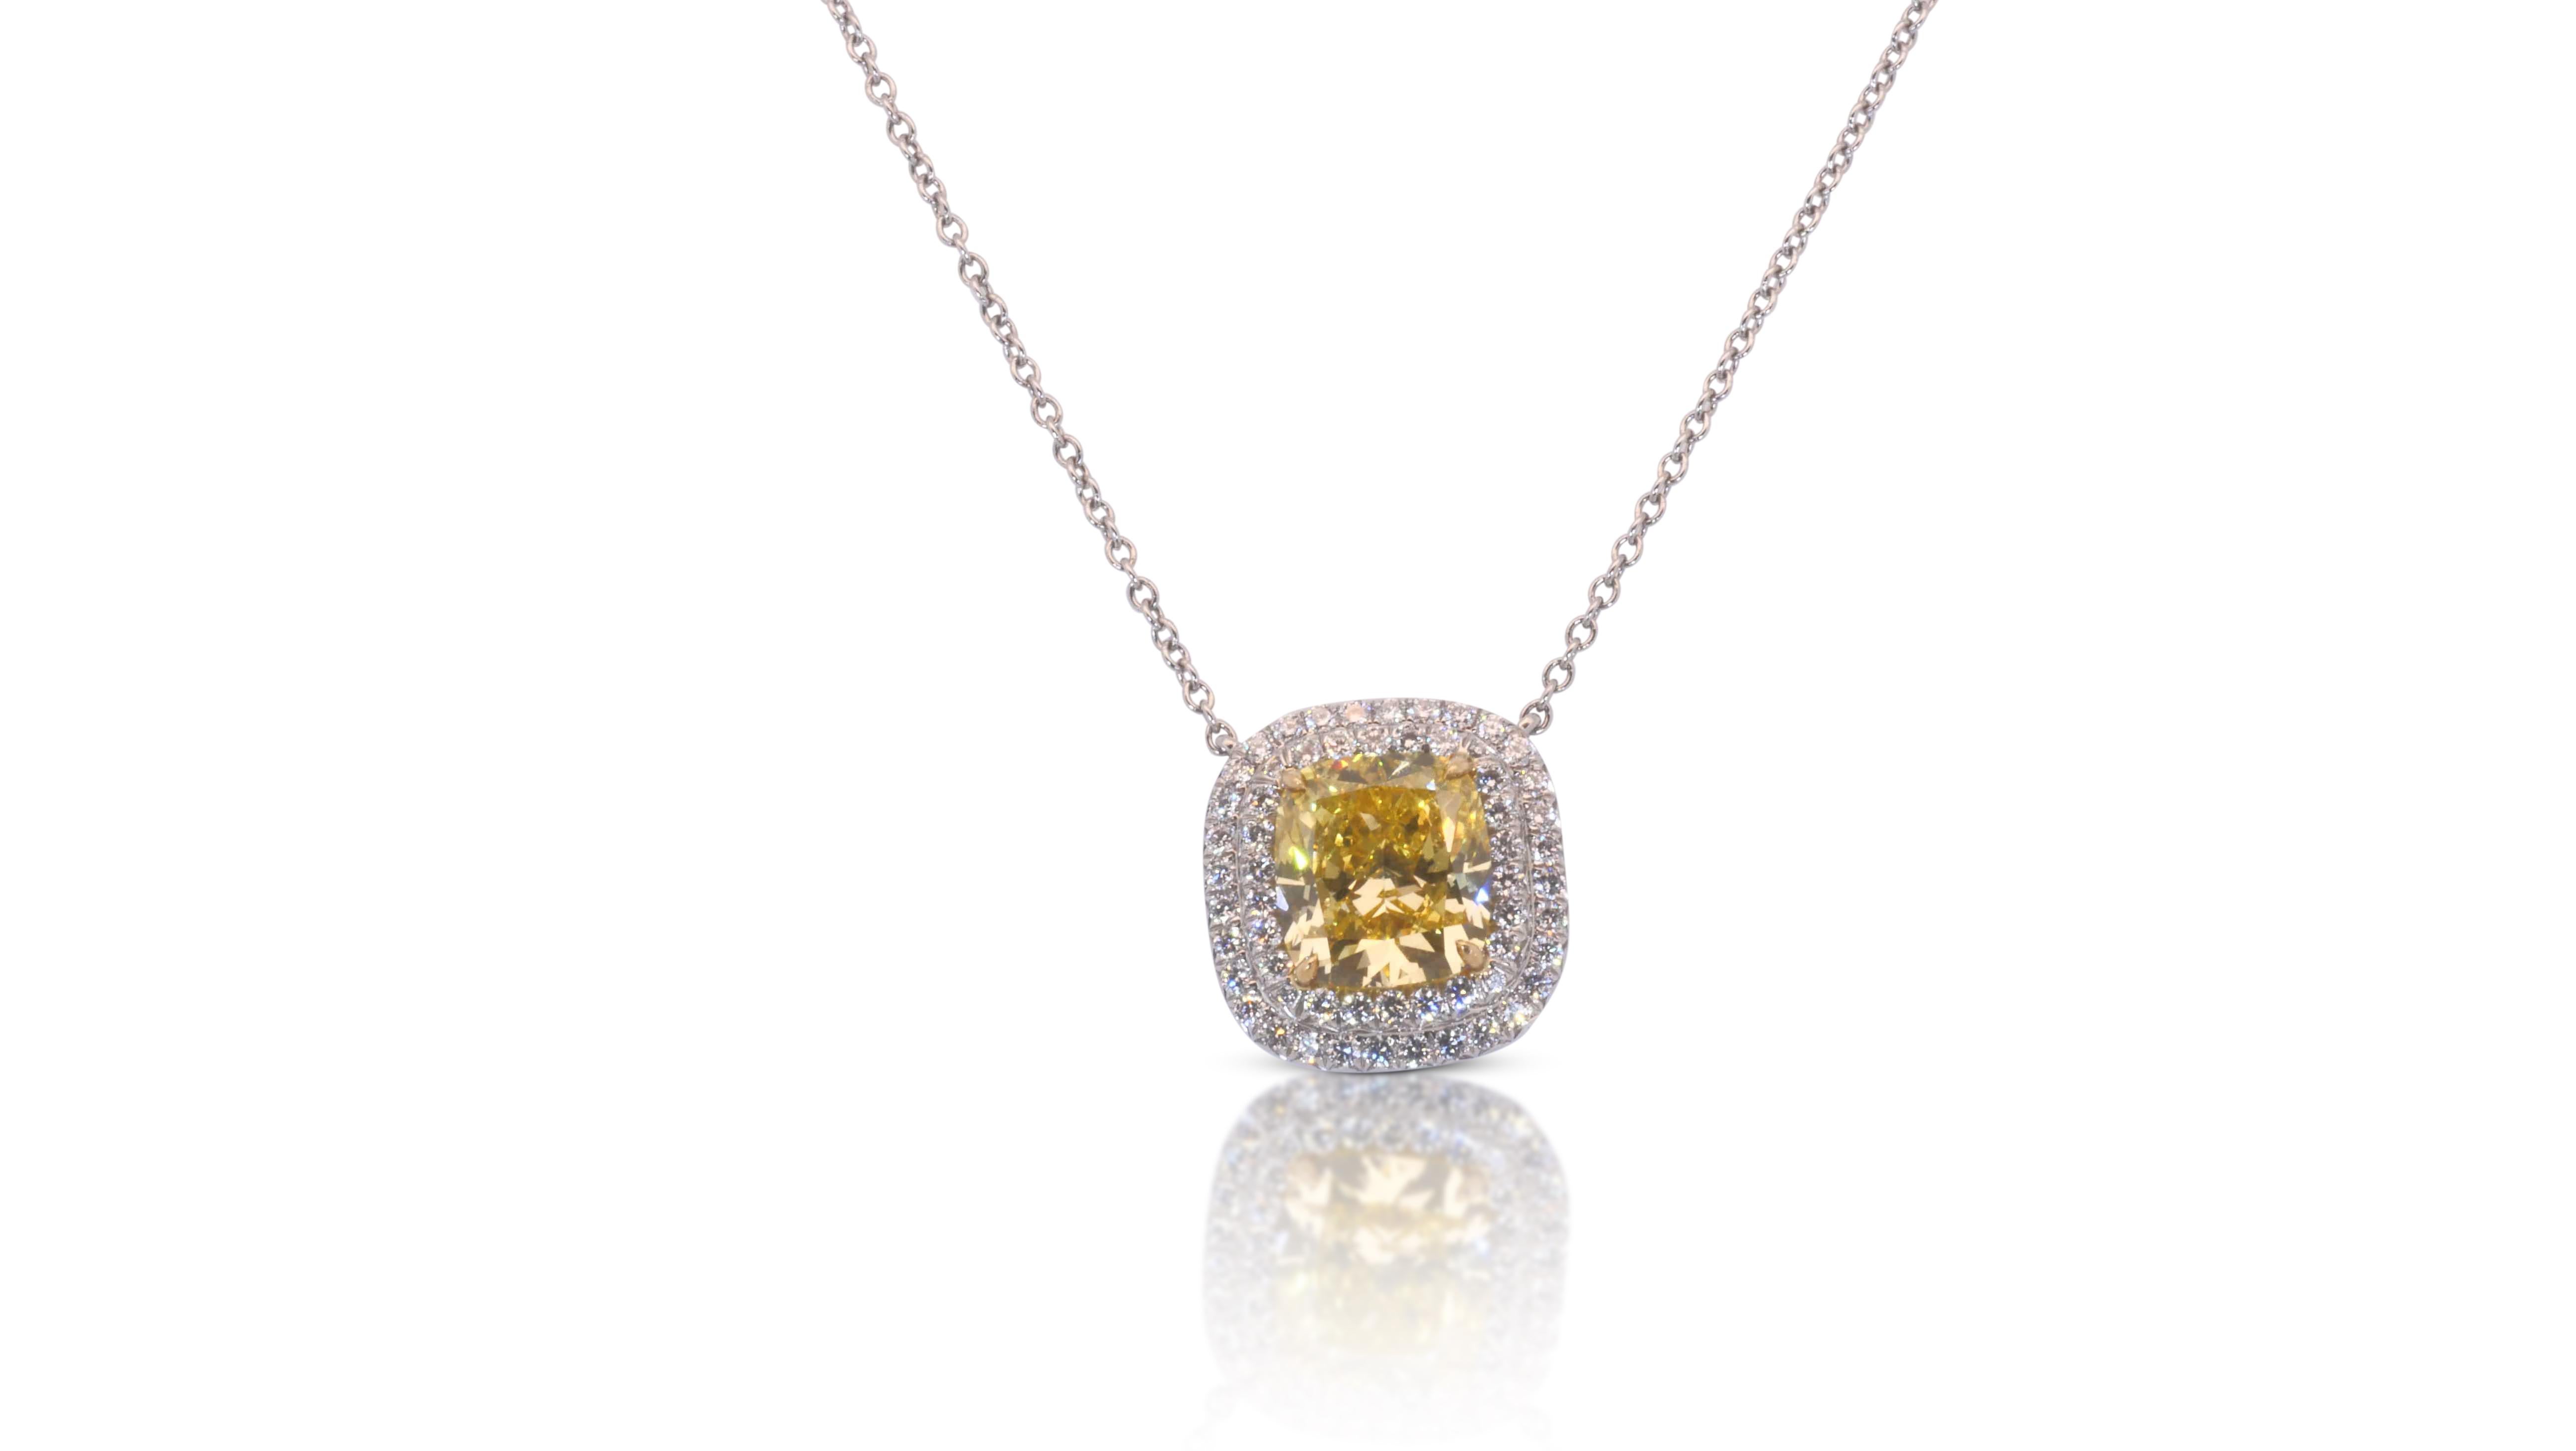 18k White Gold Necklace & Platinum Pendant 3.26ct Natural Diamonds TIFANNY&CO. For Sale 1